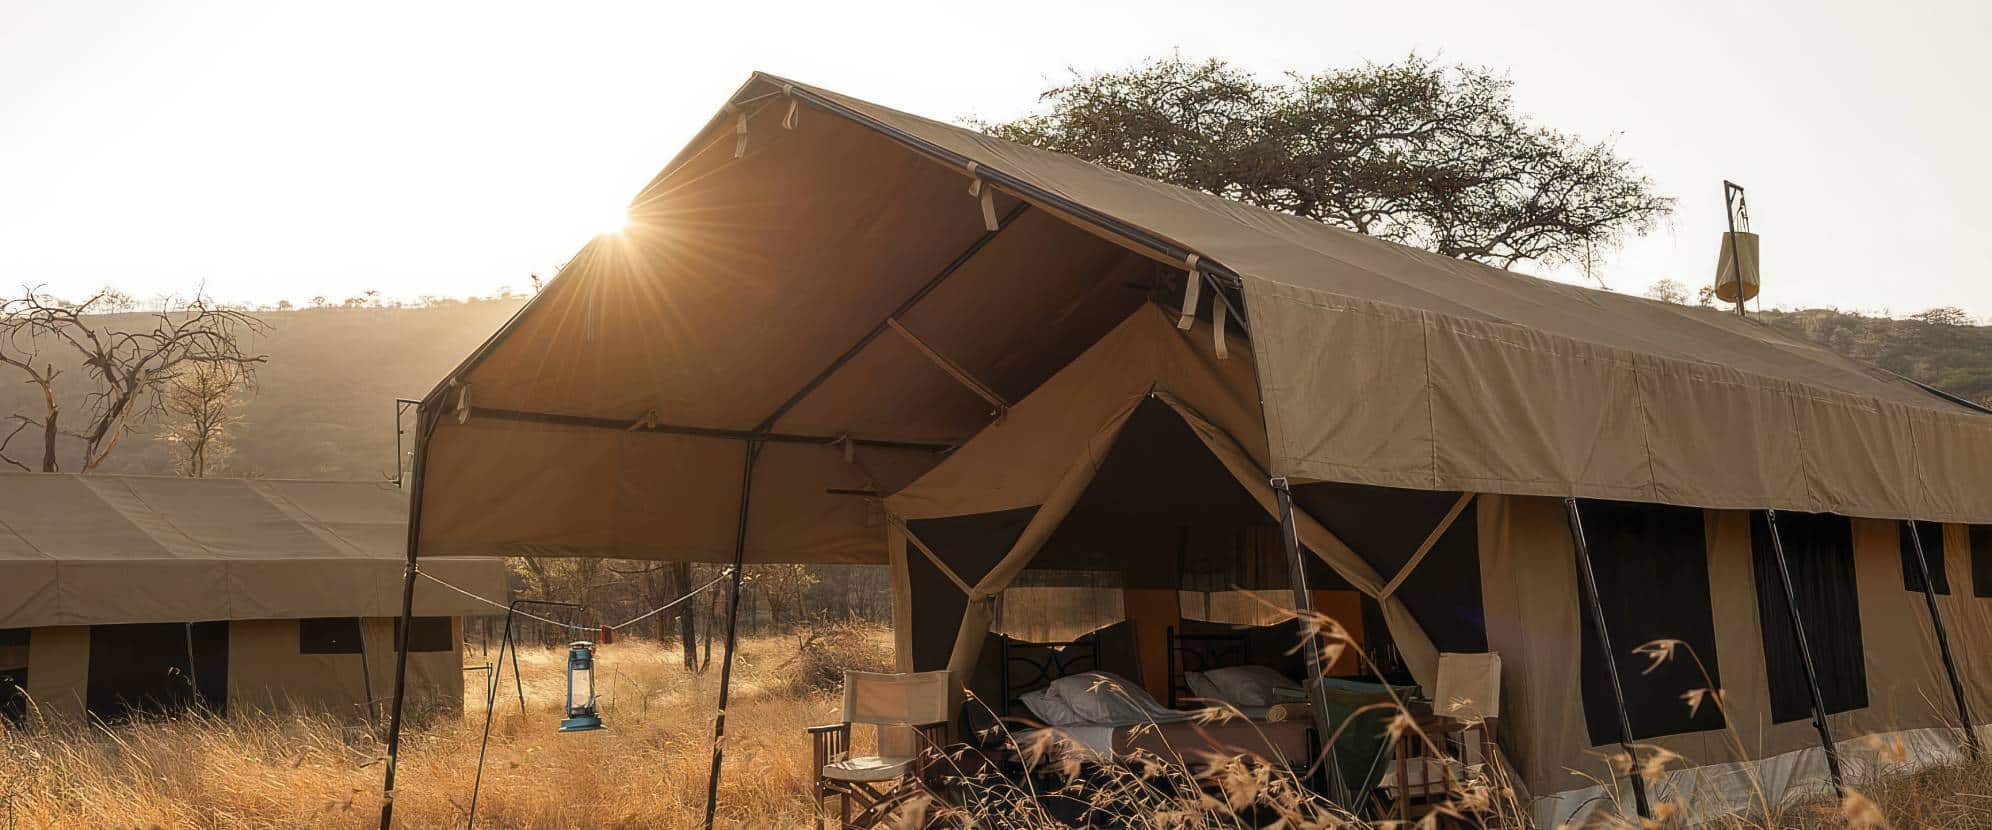 <a href="https://www. Easytravel. Co. Tz/accommodation/ndutu-kati-kati-tented-camp/">ndutu kati kati tented camp</a>